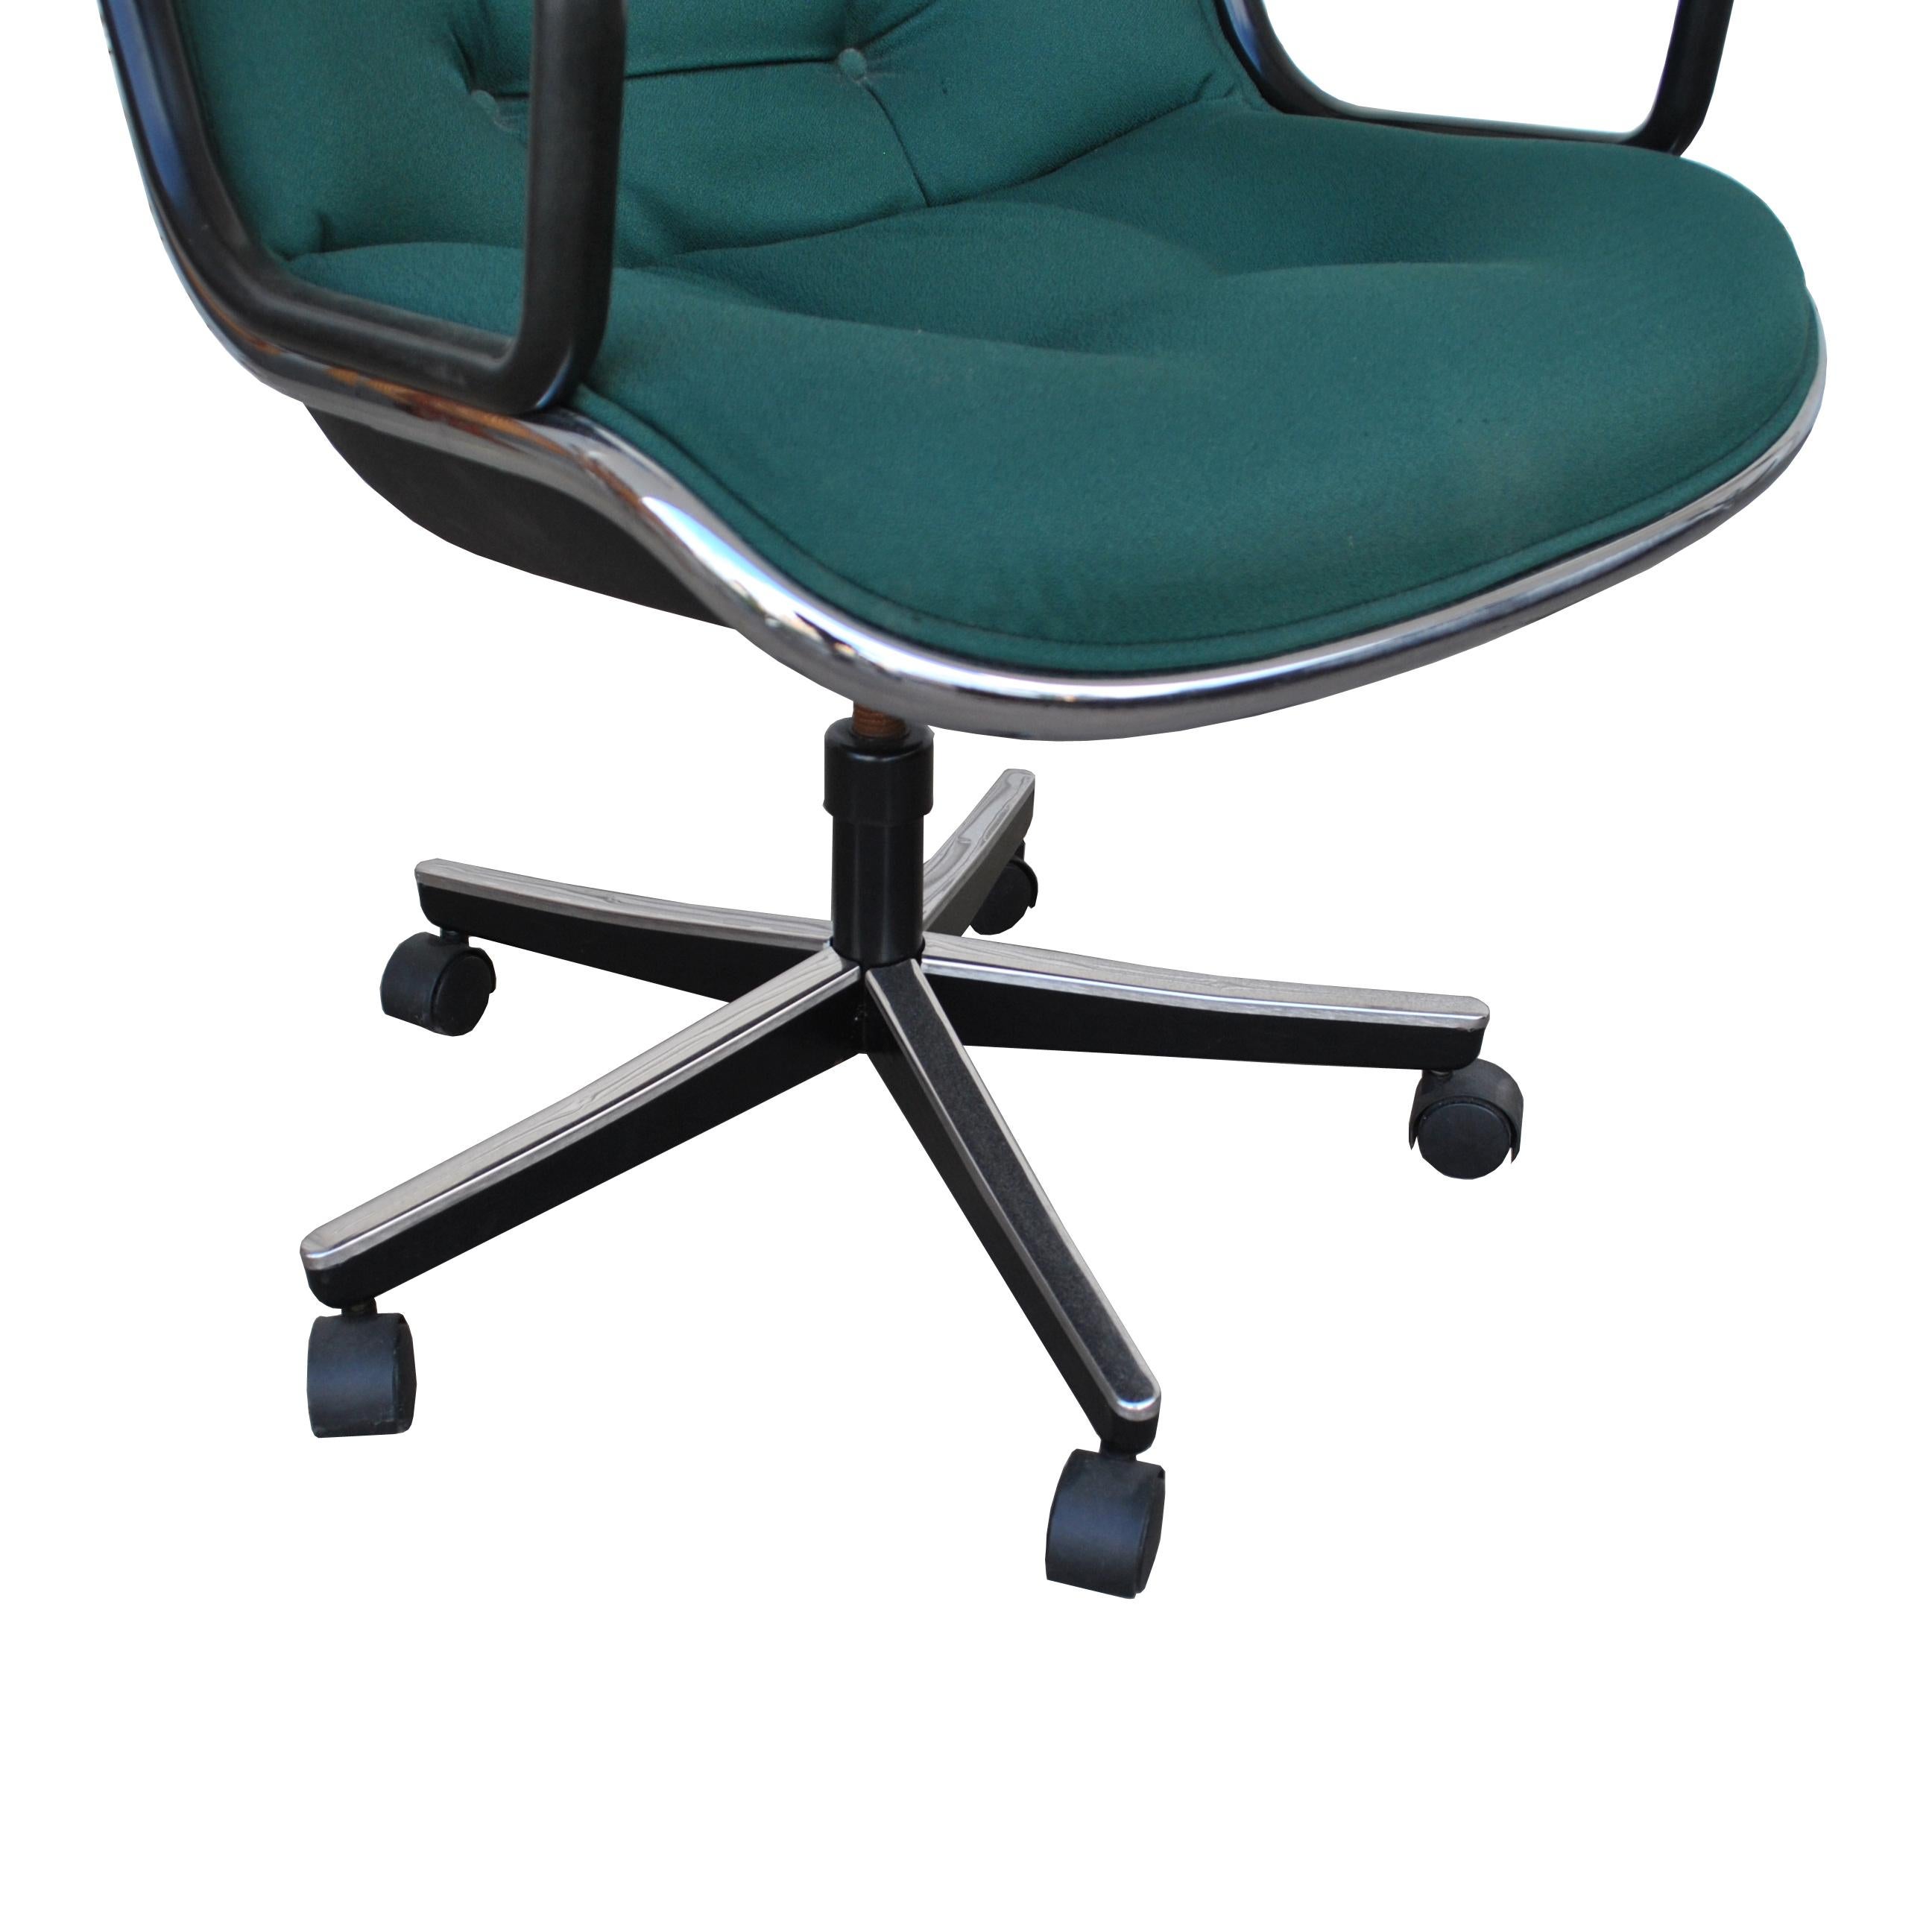 American Green Fabric Executive Knoll Pollock Chair 